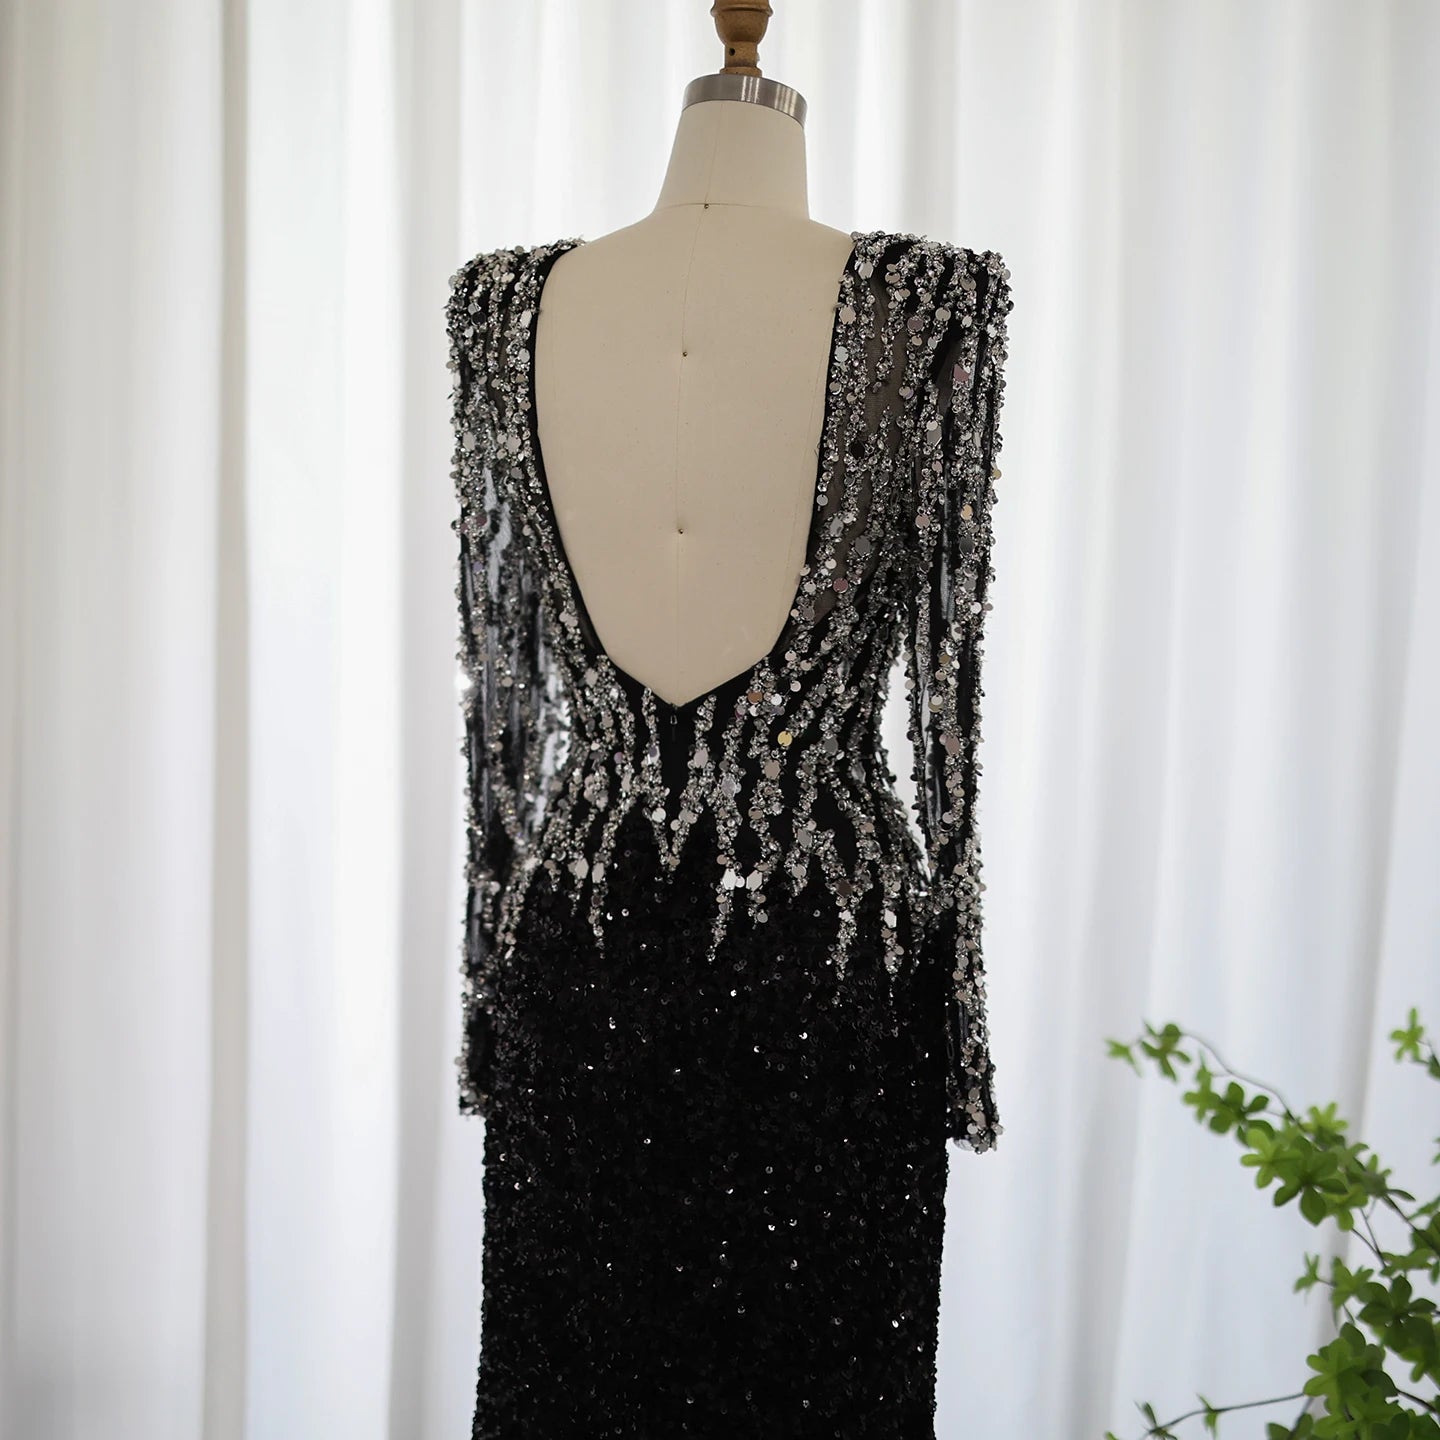 Luxury Black Mermaid Evening Dress Elegant V-Neck Long Sleeves Party Gowns